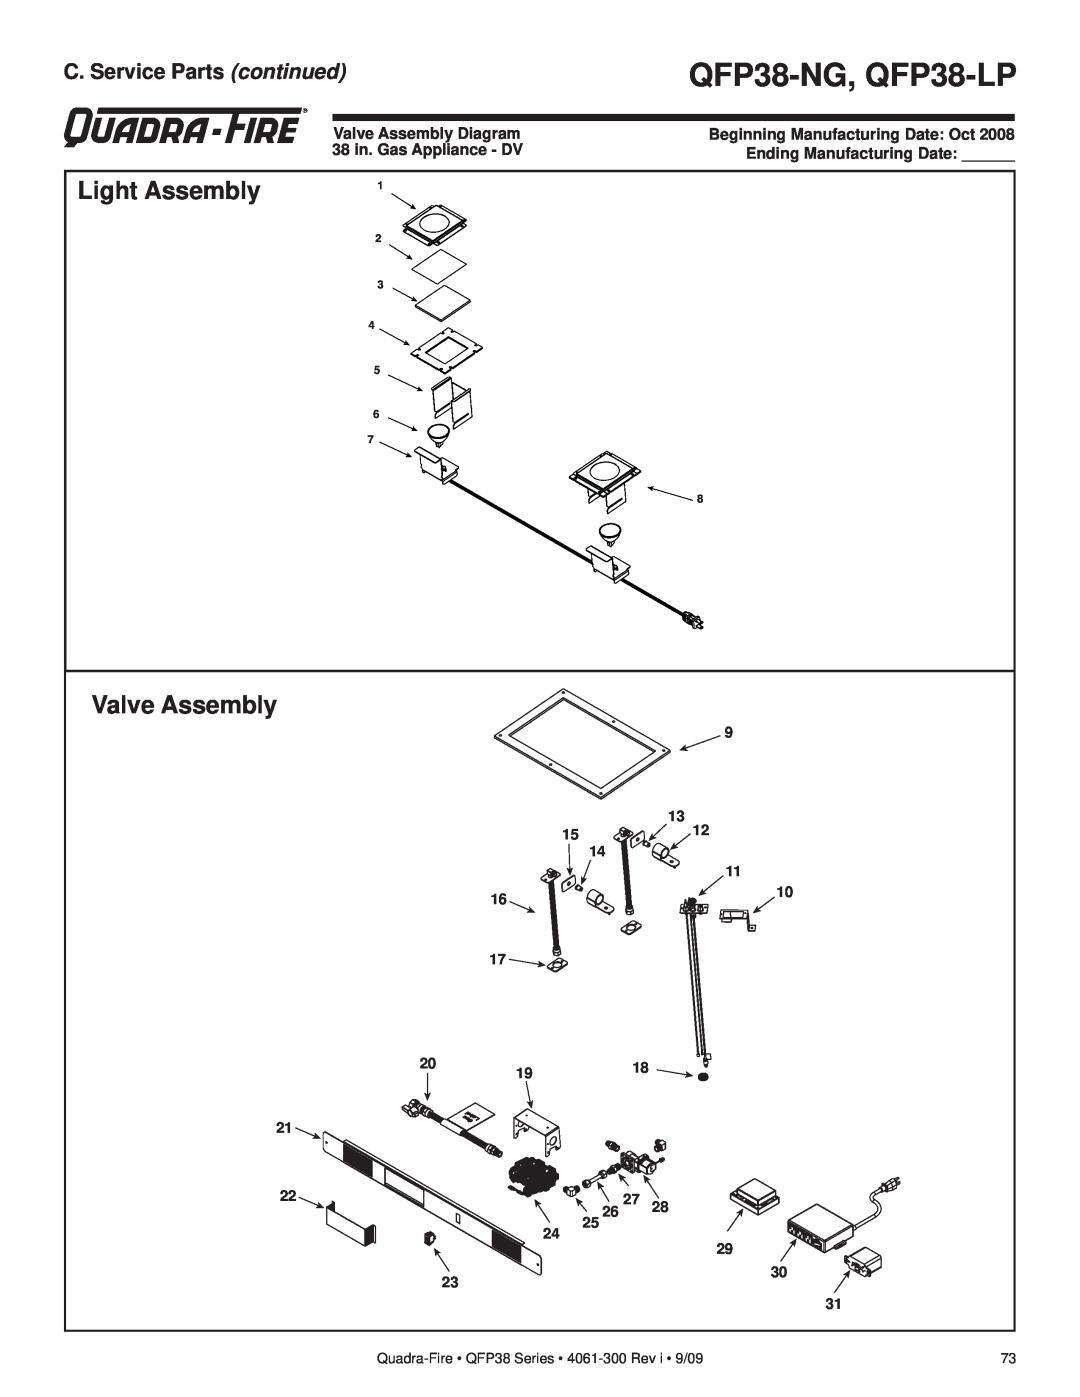 Quadra-Fire owner manual Light Assembly, C. Service Parts continued, QFP38-NG, QFP38-LP, Valve Assembly Diagram 